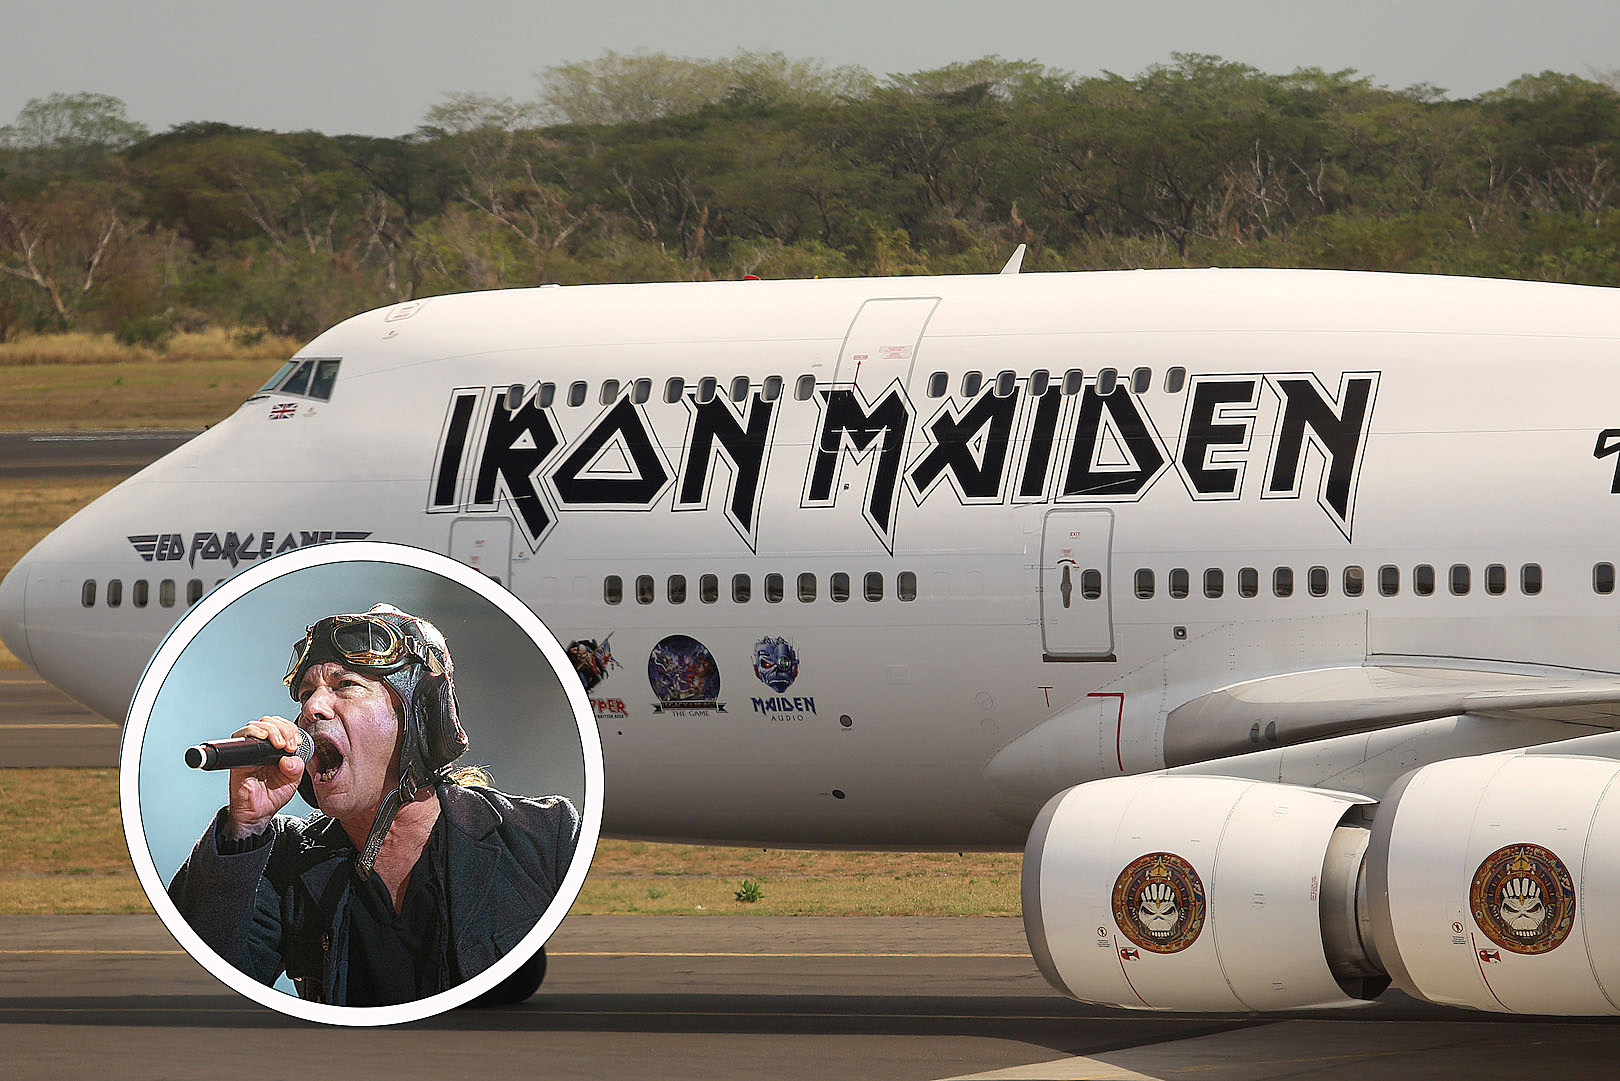 Iron Maiden's Bruce Dickinson announces spoken word tour